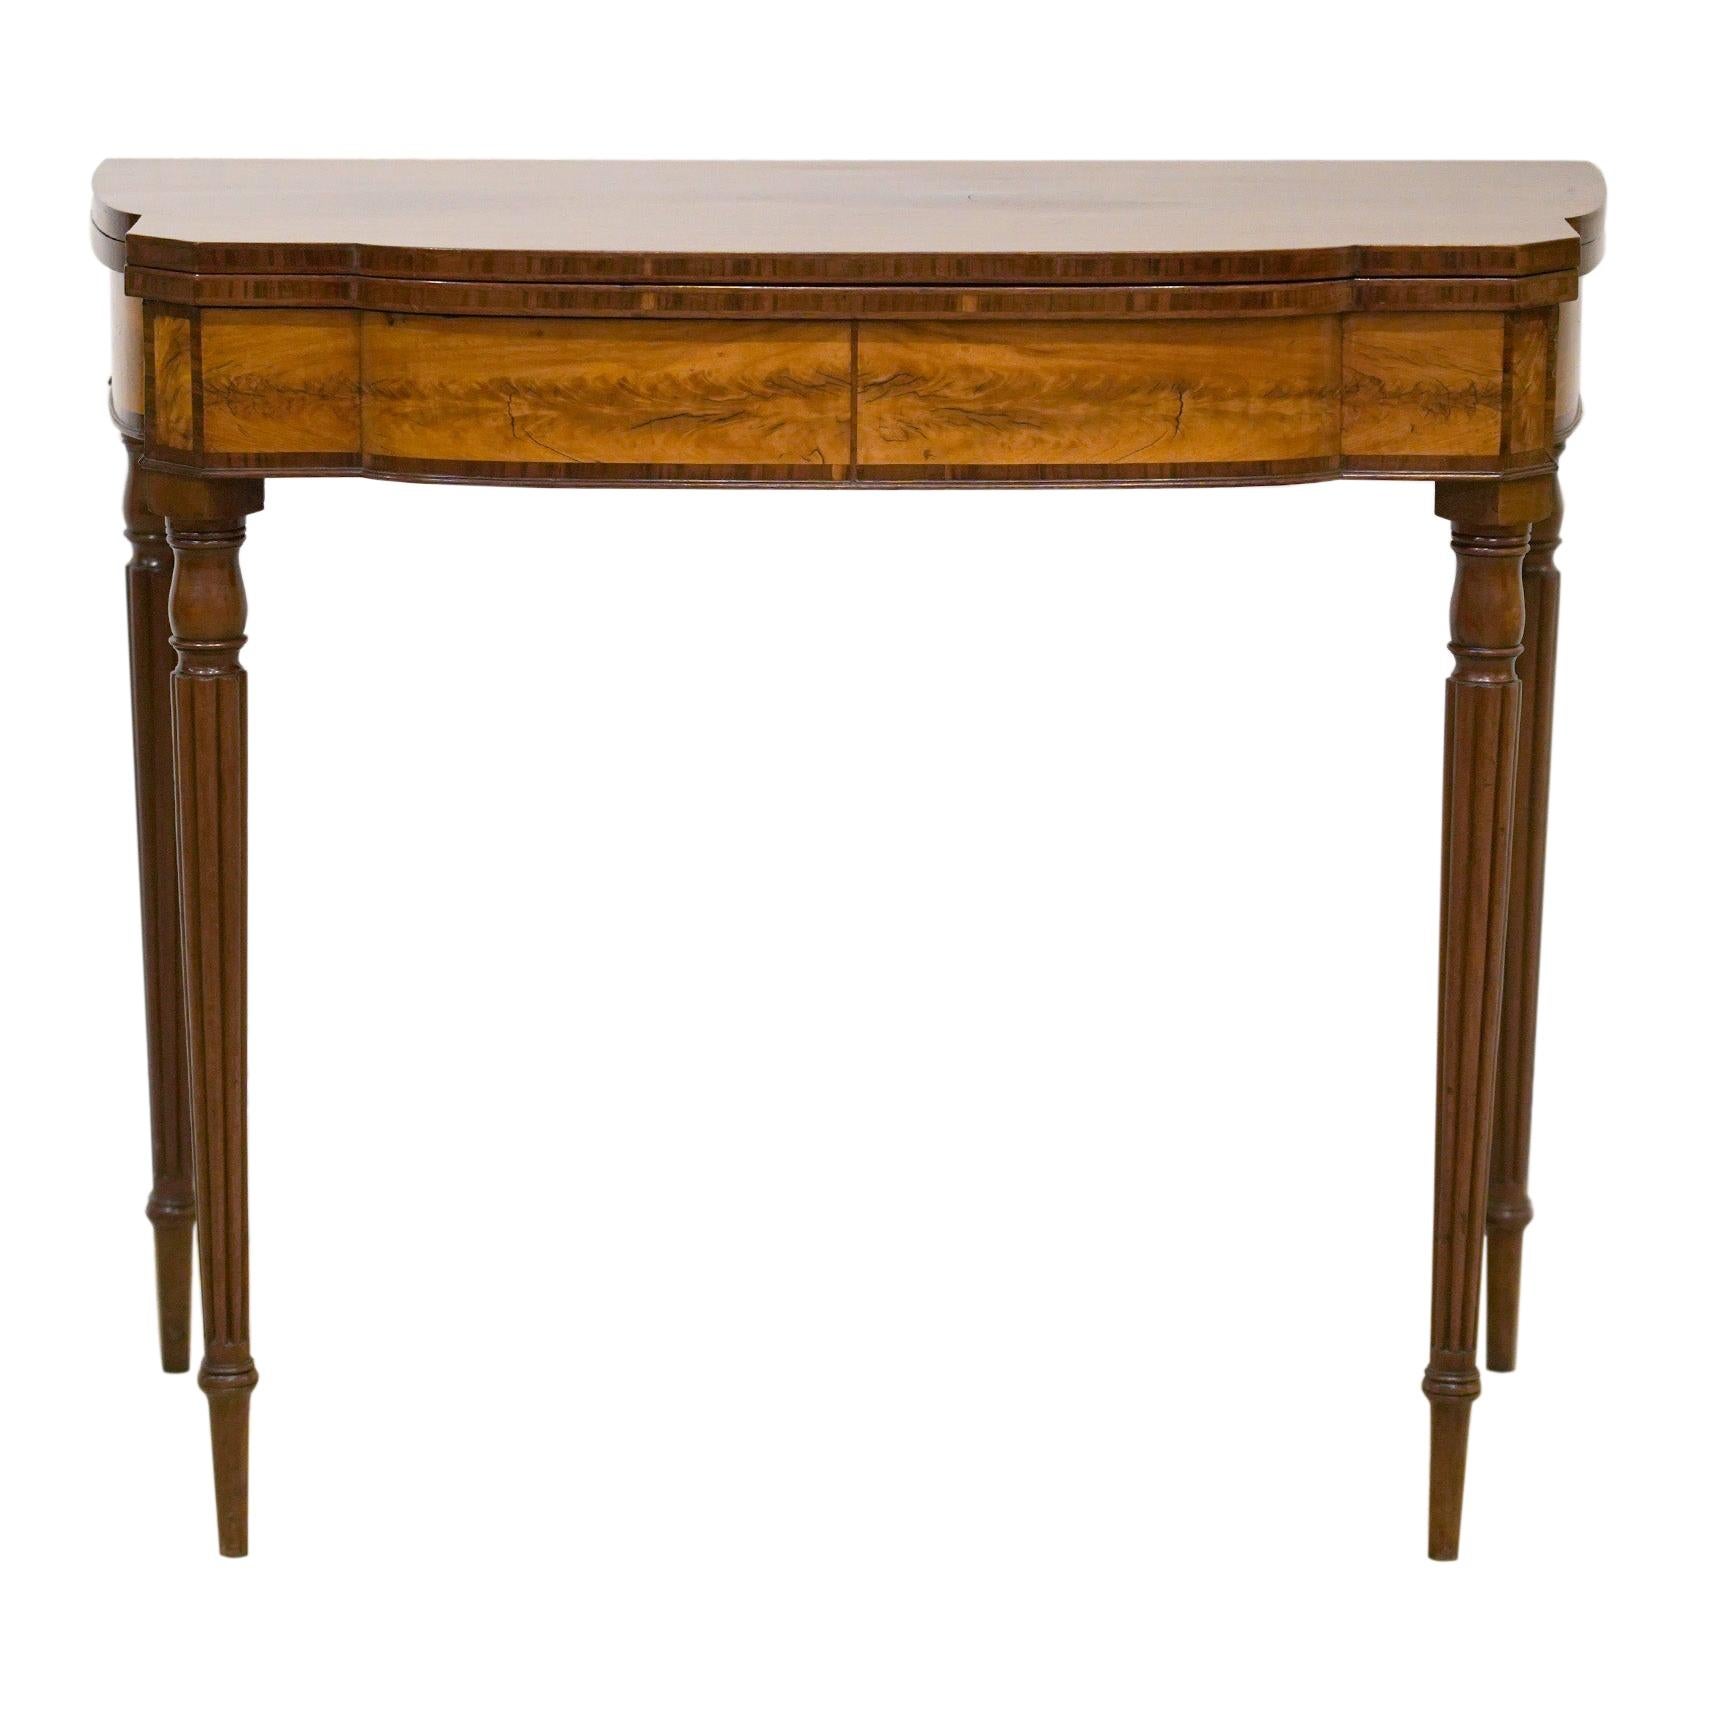 Good American Federal Boston Satinwood Inlaid Mahogany Game Table, Circa 1820